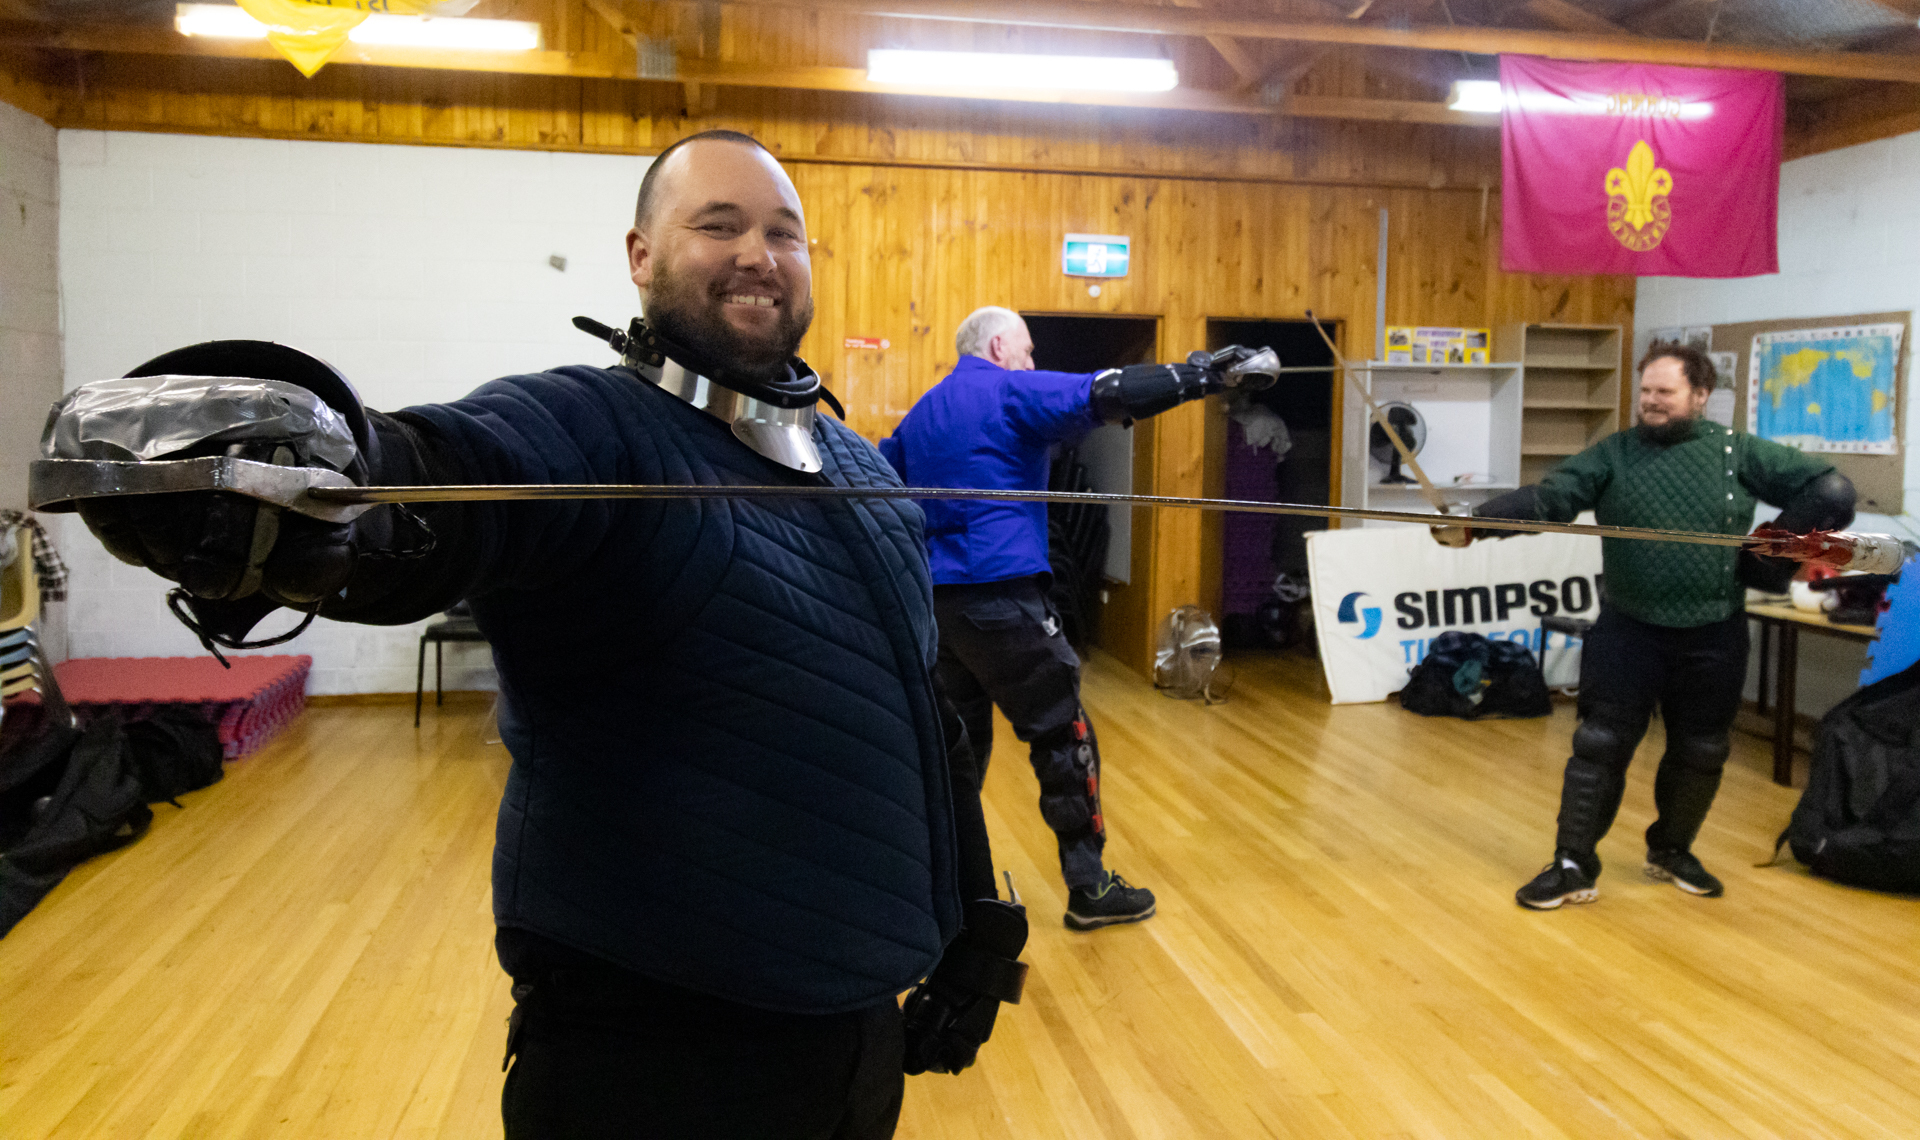 Sword fighting wields friendship and wellbeing in Gunning